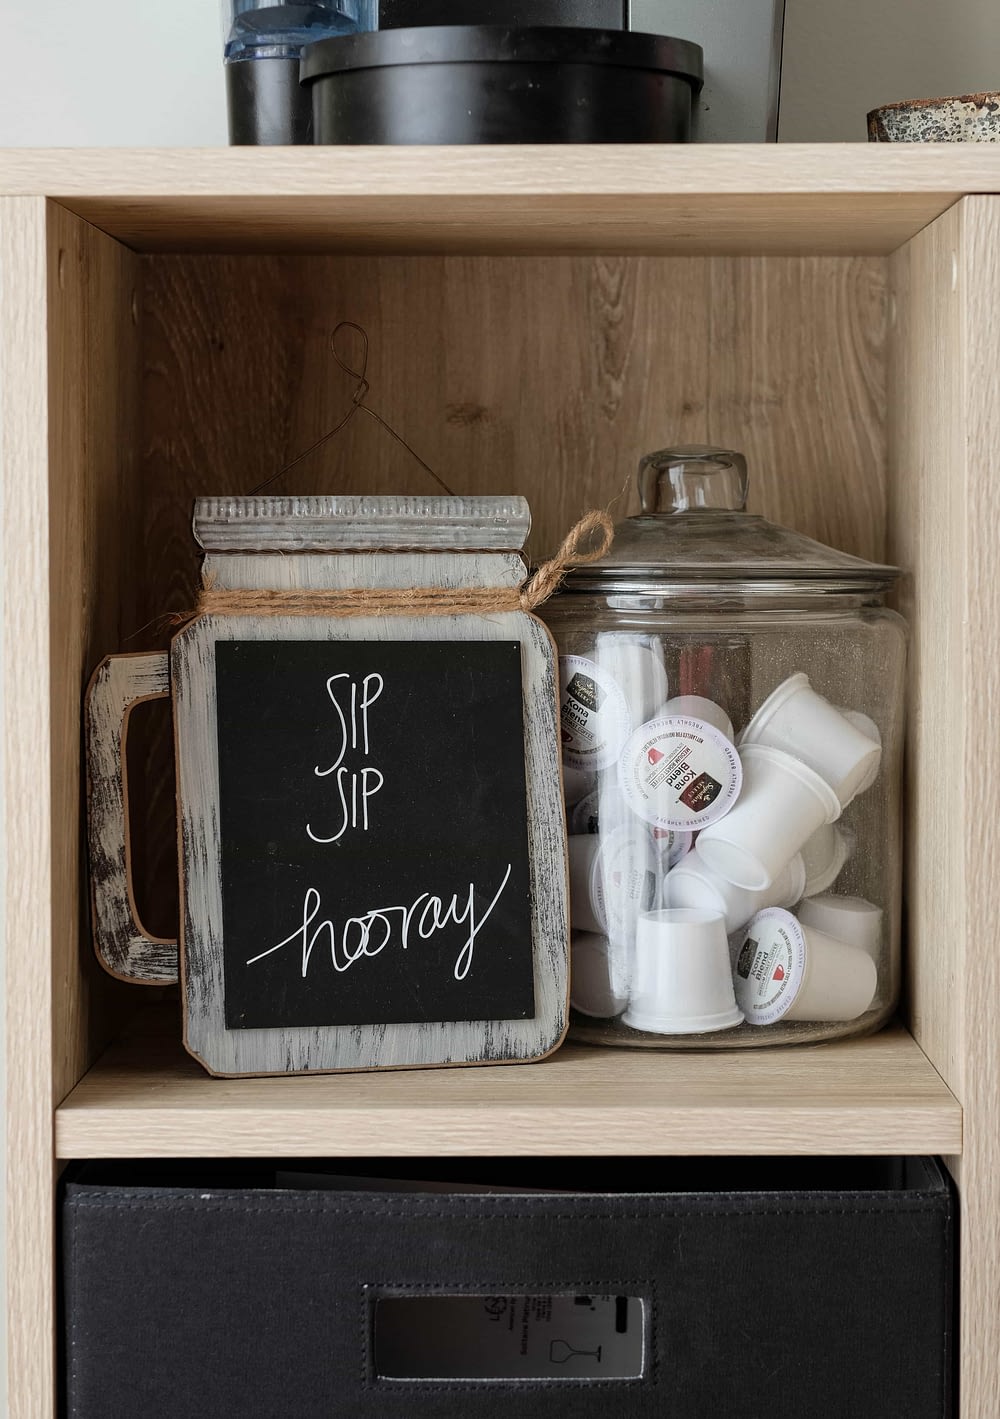 Coffee Bar shelf with "sip sip hooray" blackboard 